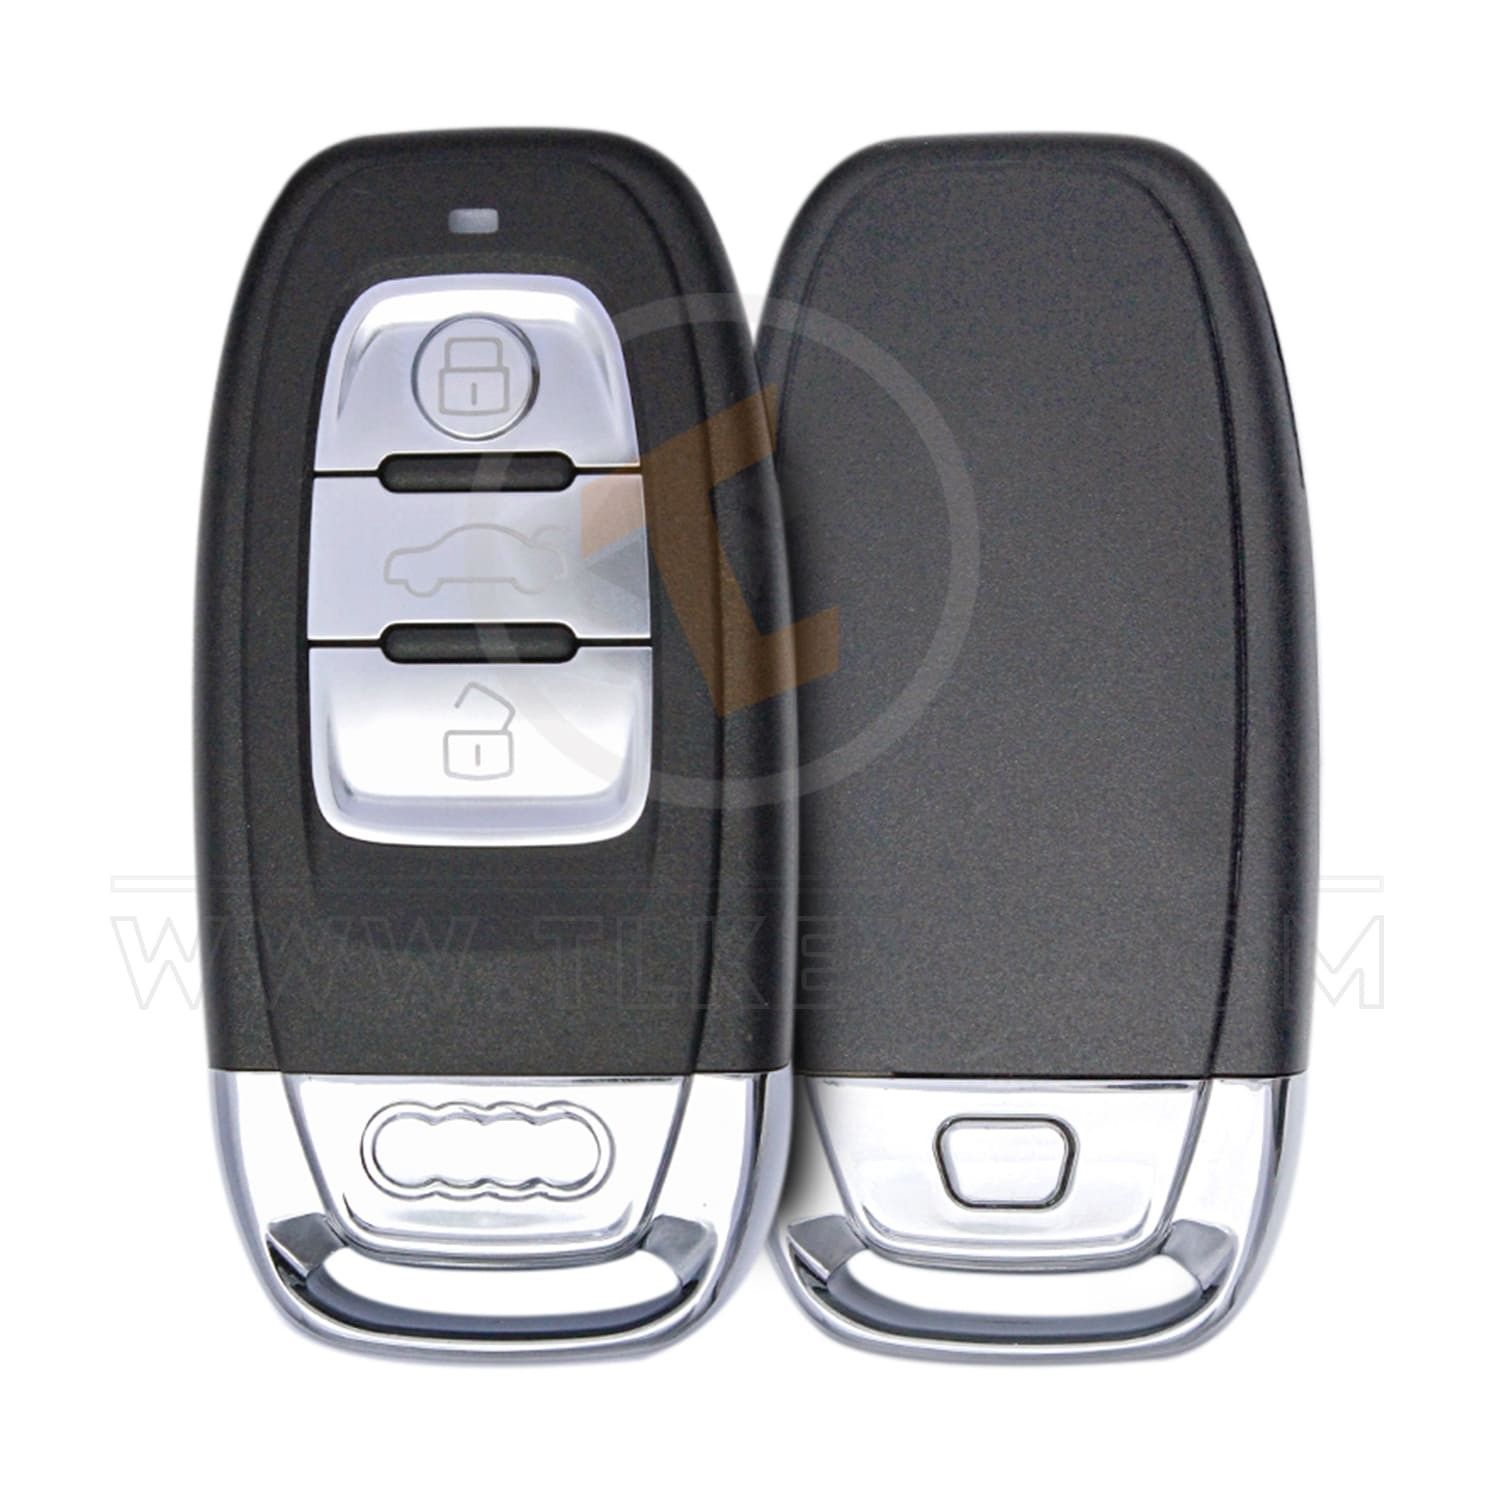 Audi Non-Proximity Smart Remote Key 434MHz 3 Buttons Buttons 3